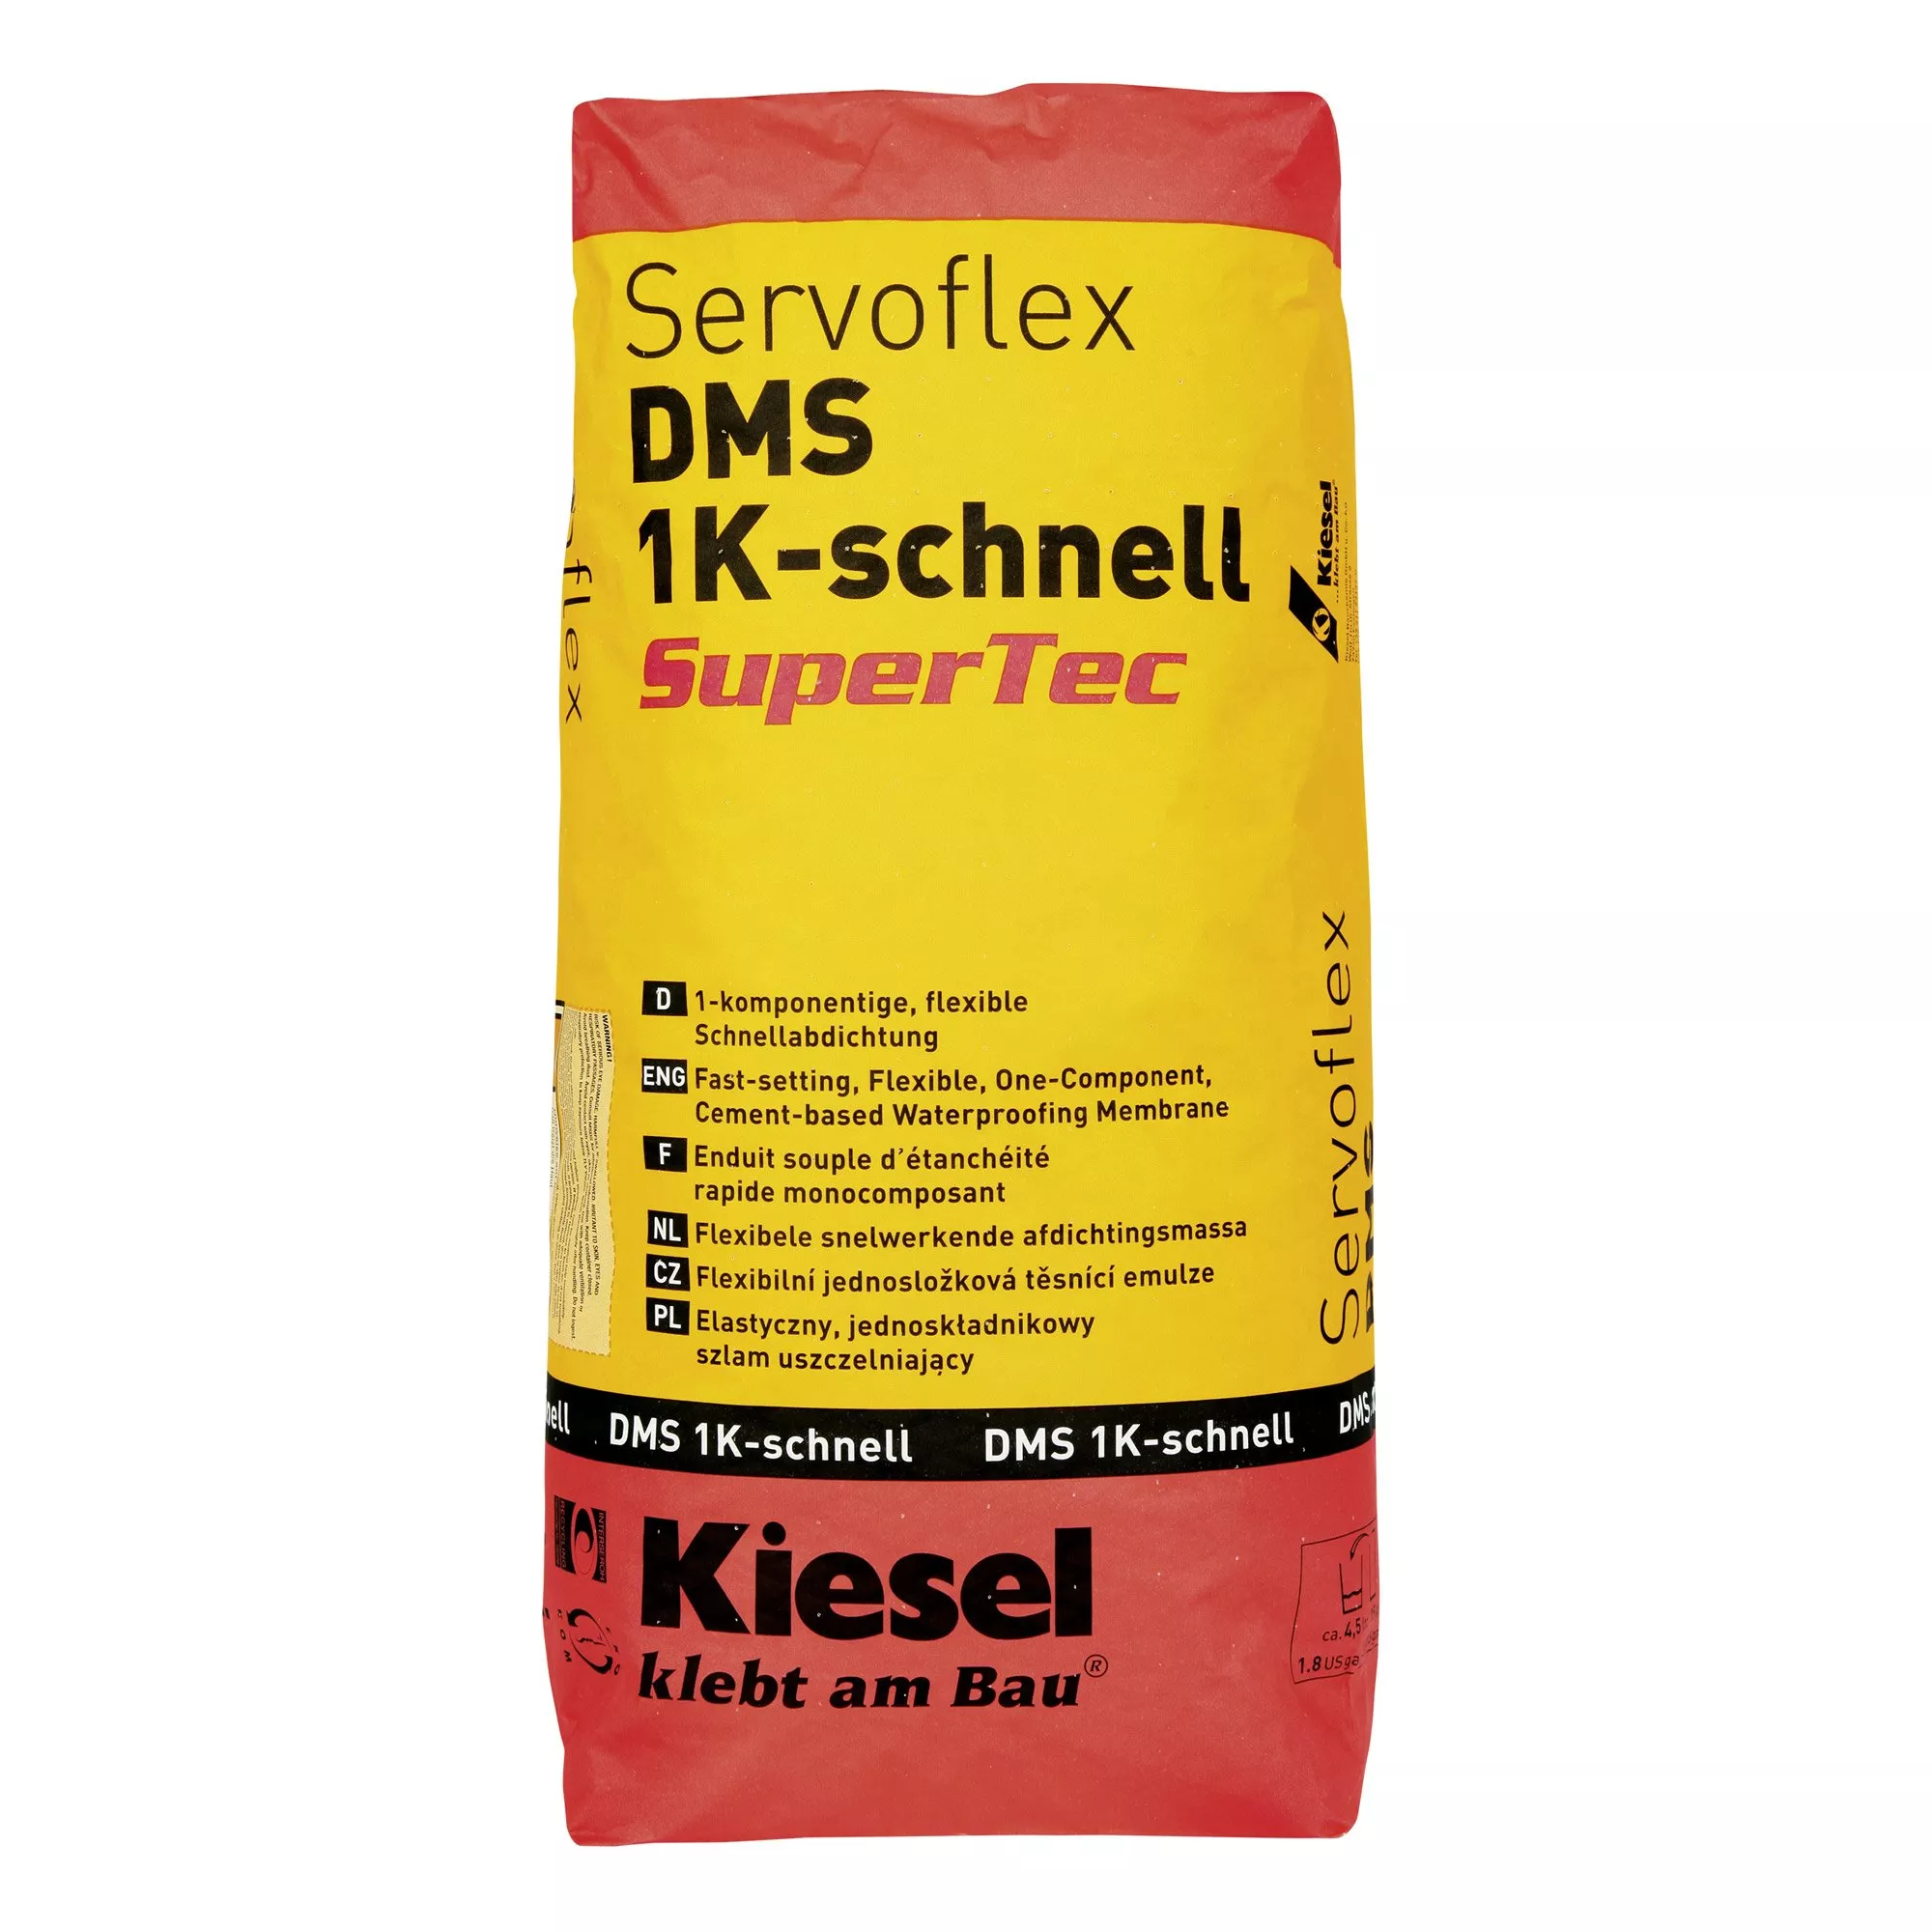 Kiesel Servoflex DMS 1K fast SuperTec - joustava pikatiivistys (15KG)